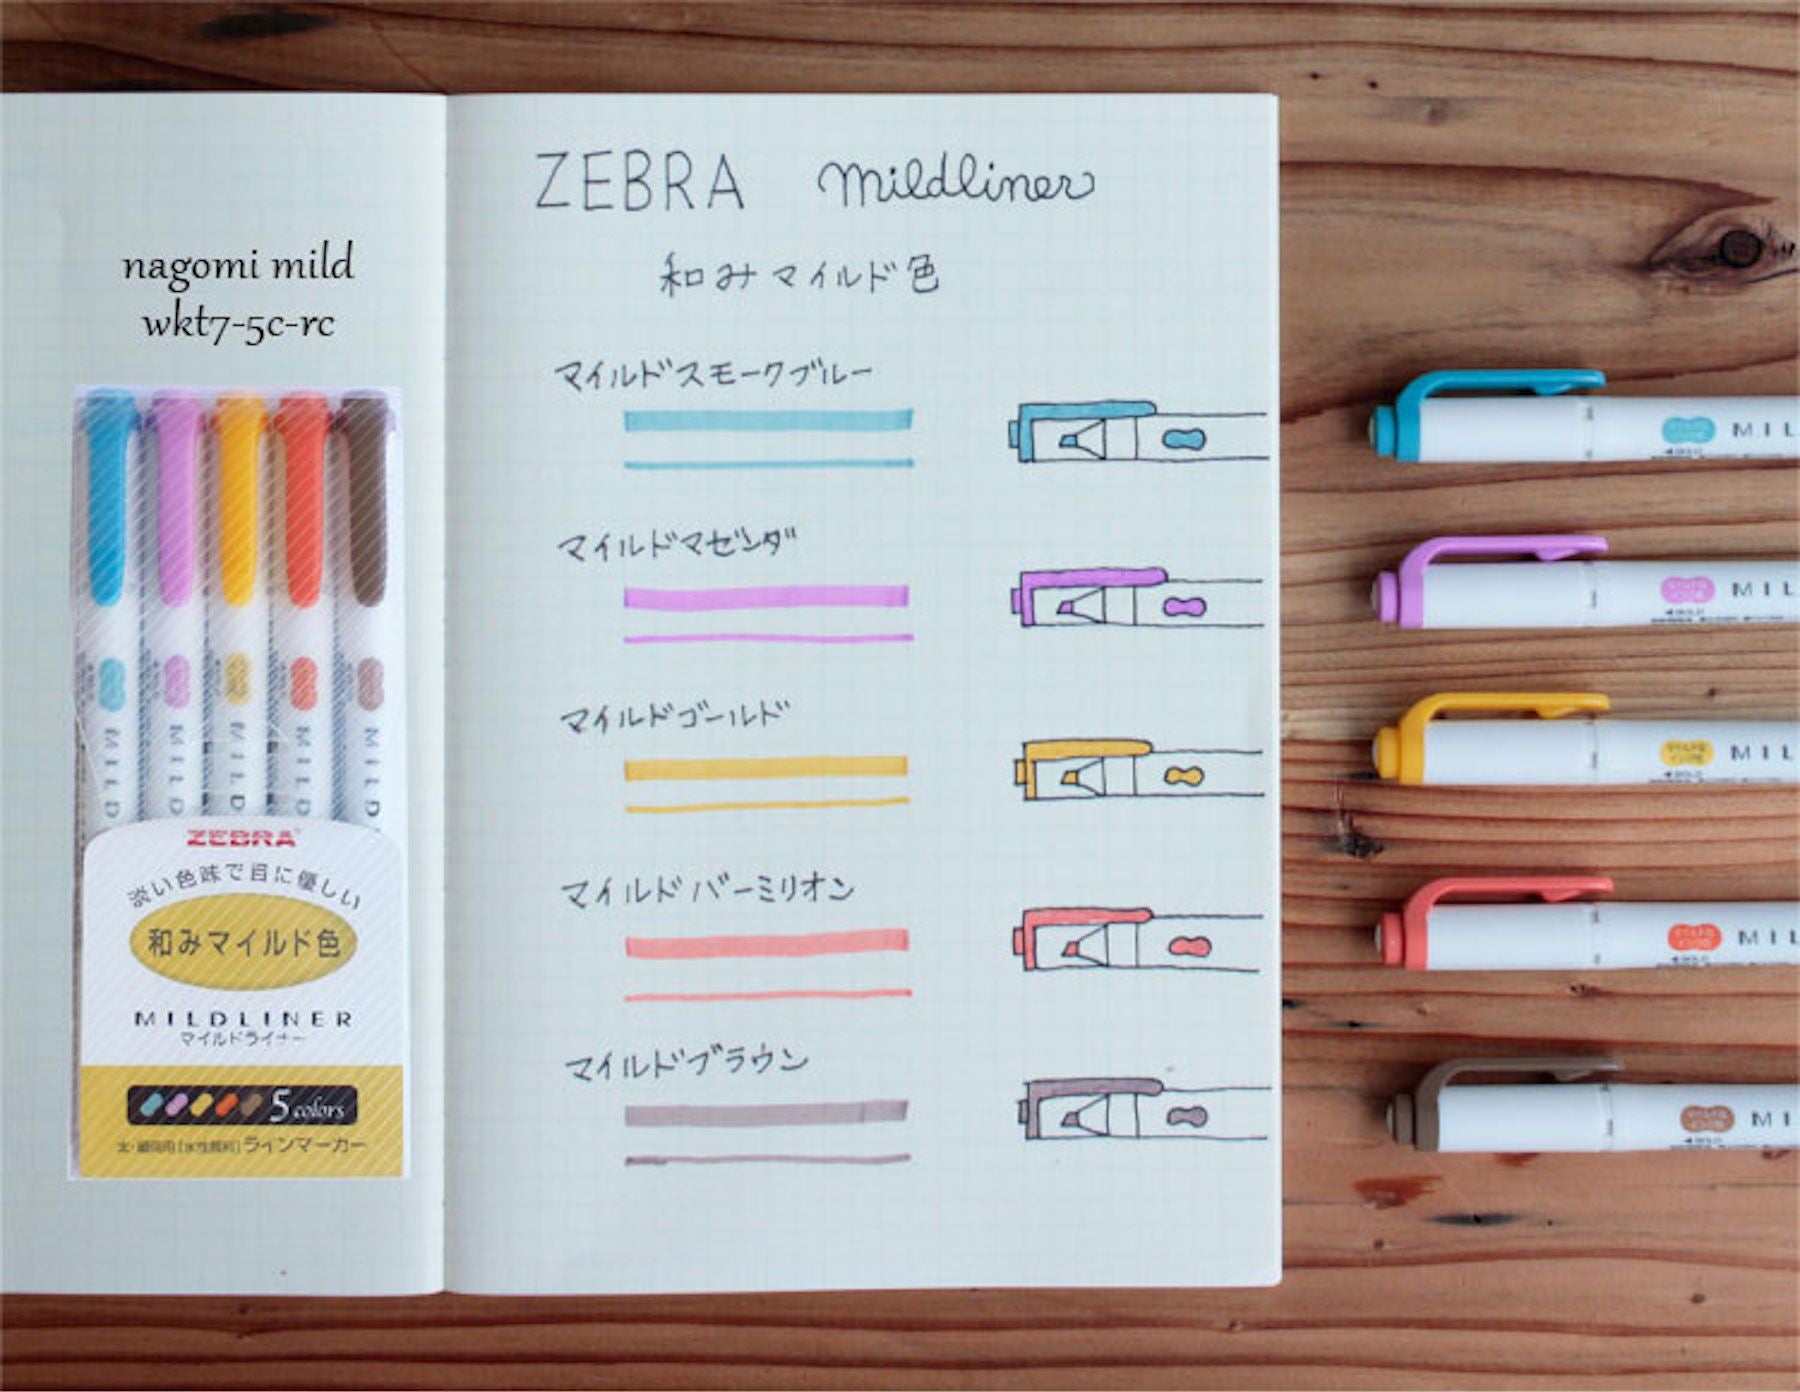 Zebra pens - Nagomi / Warm x 5 Pens